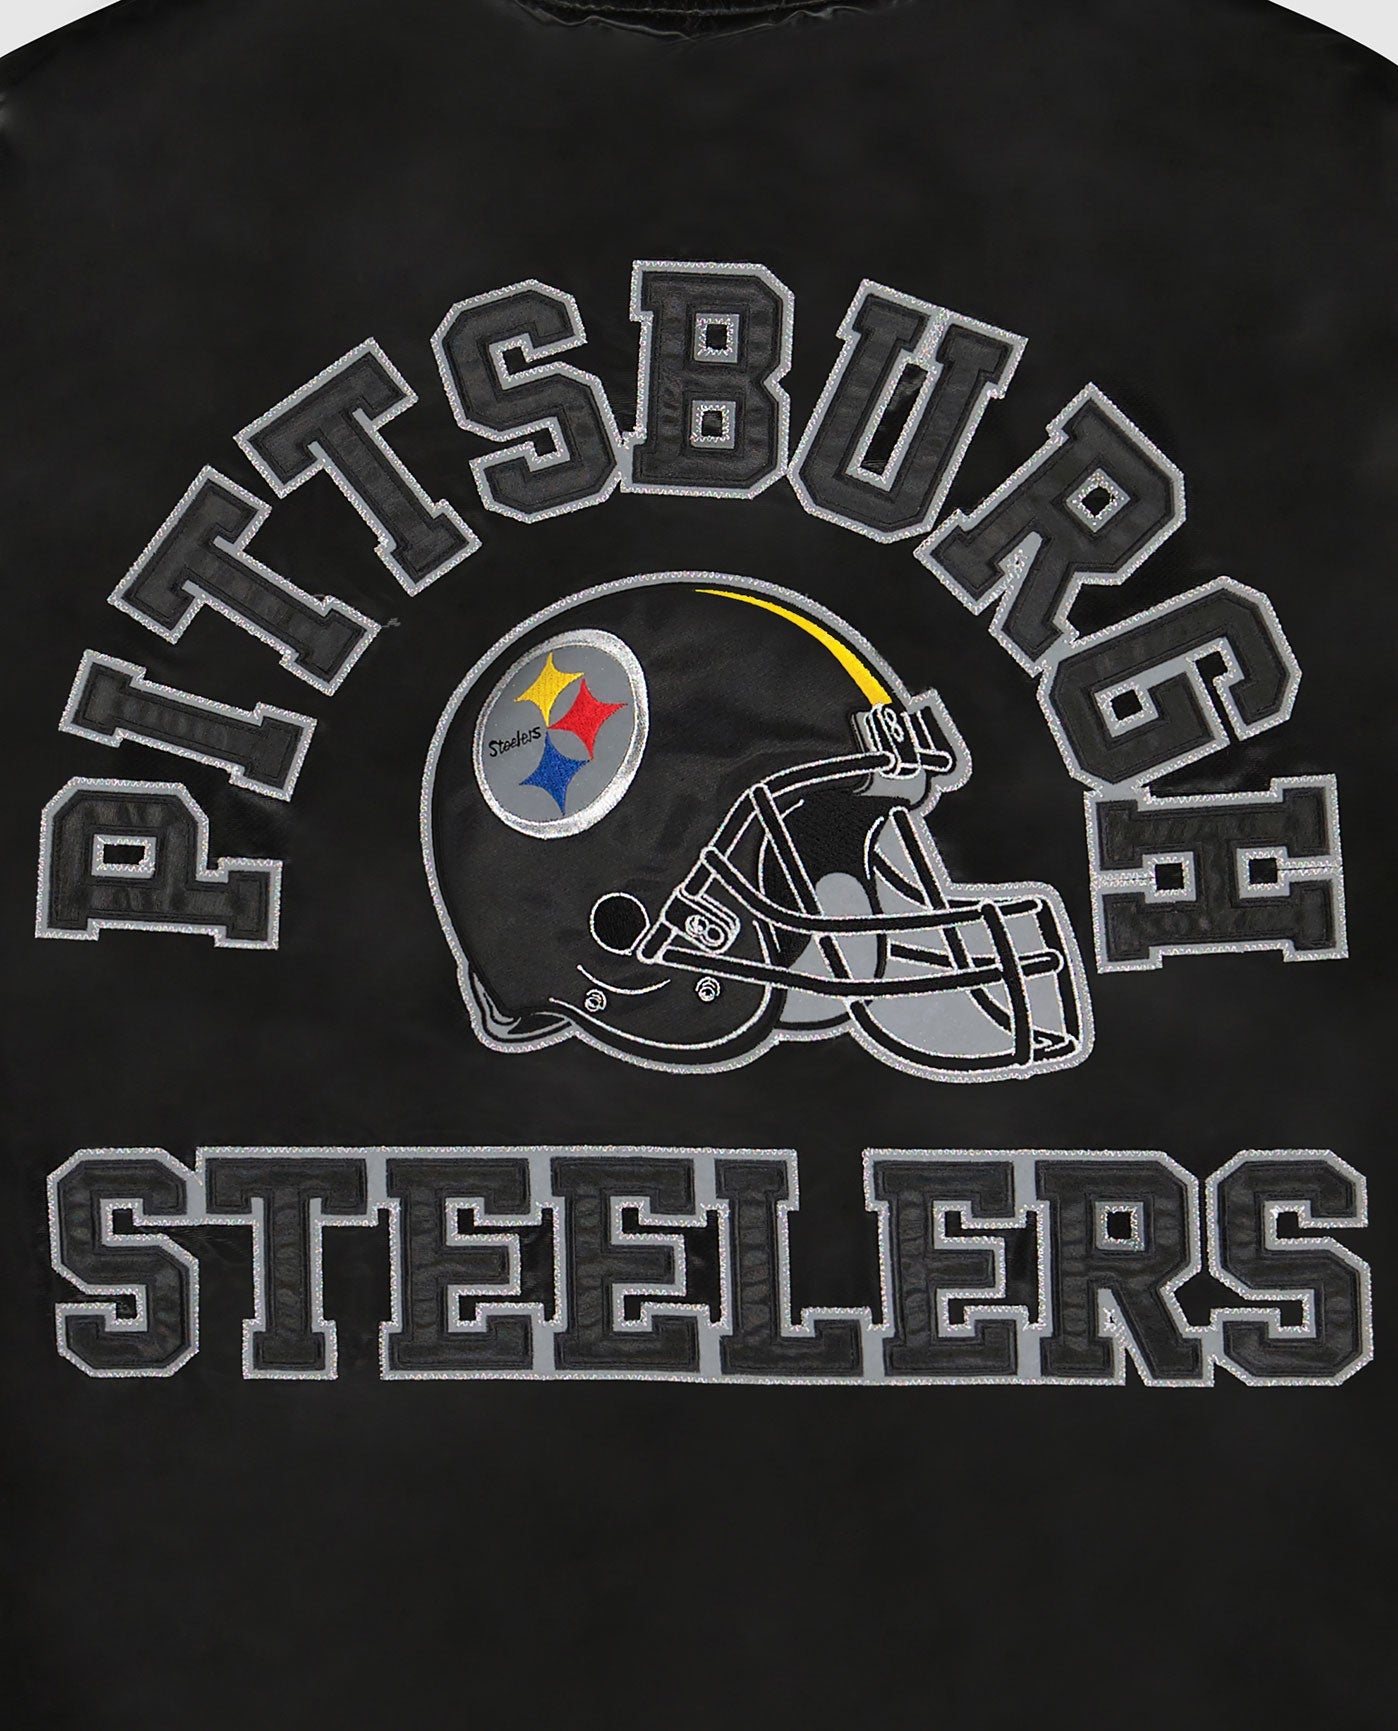 PITTSBURGH STEELERS writing and helmet logo back graphic | Steelers Black